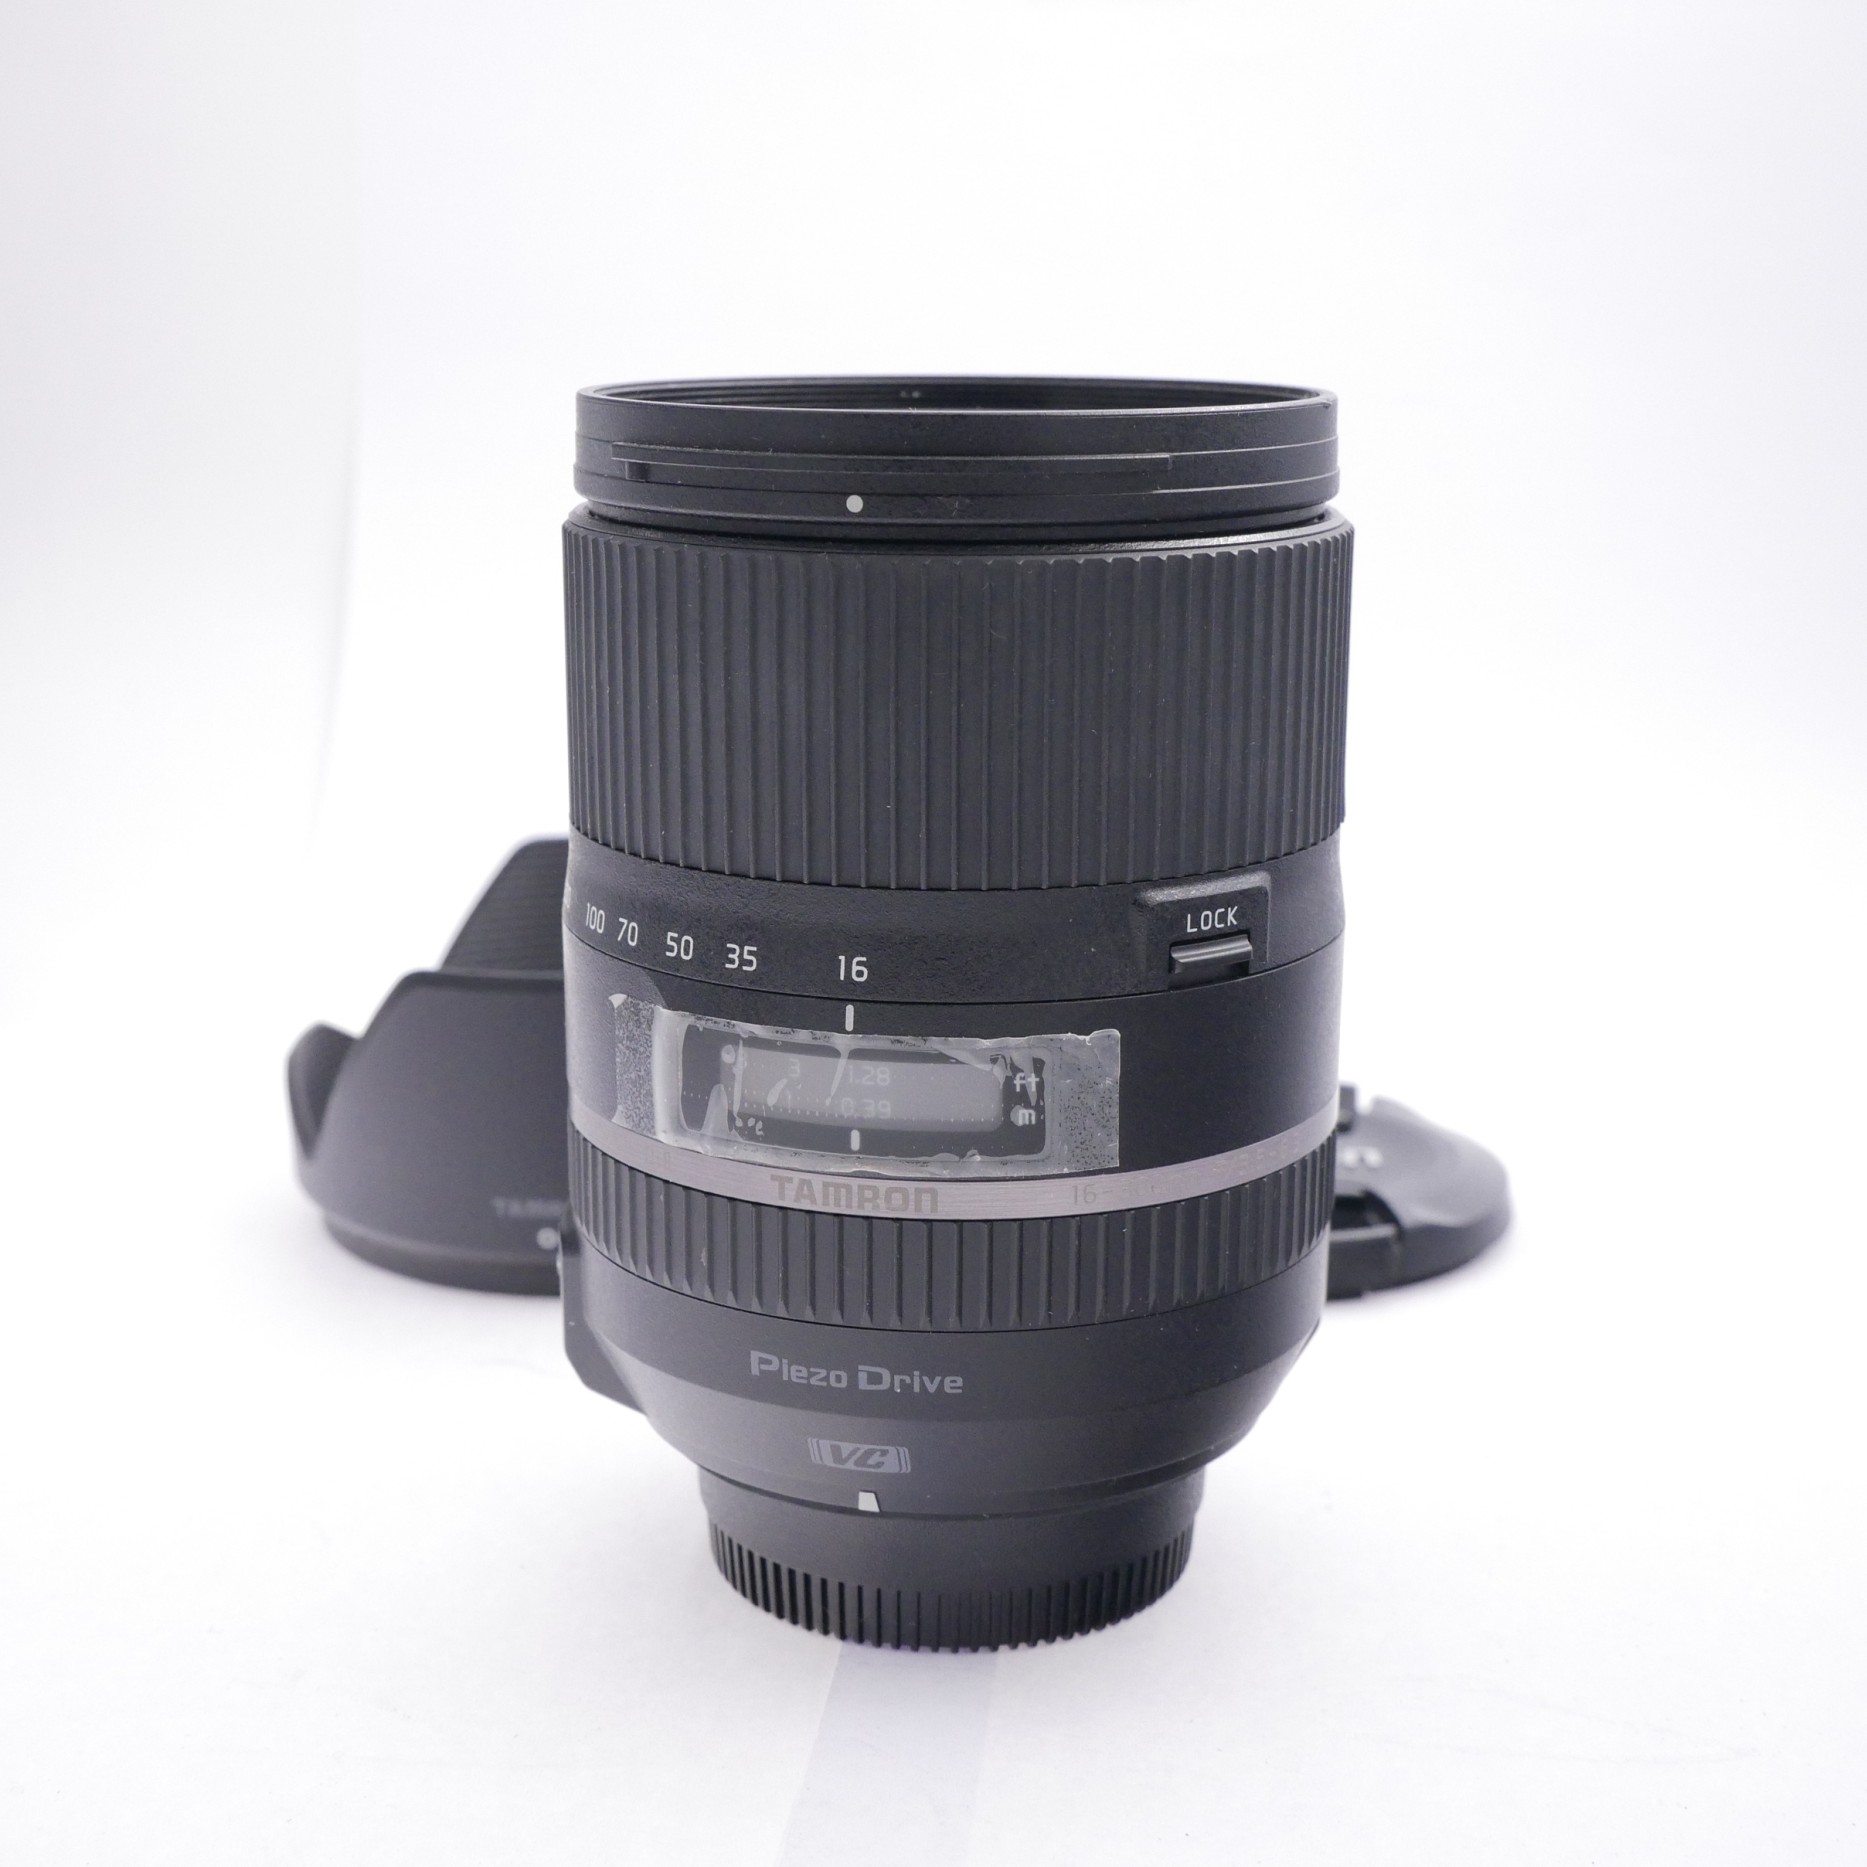 Tamron 16-300mm F3.5-6.3 Di II Lens for Nikon DX-Mount